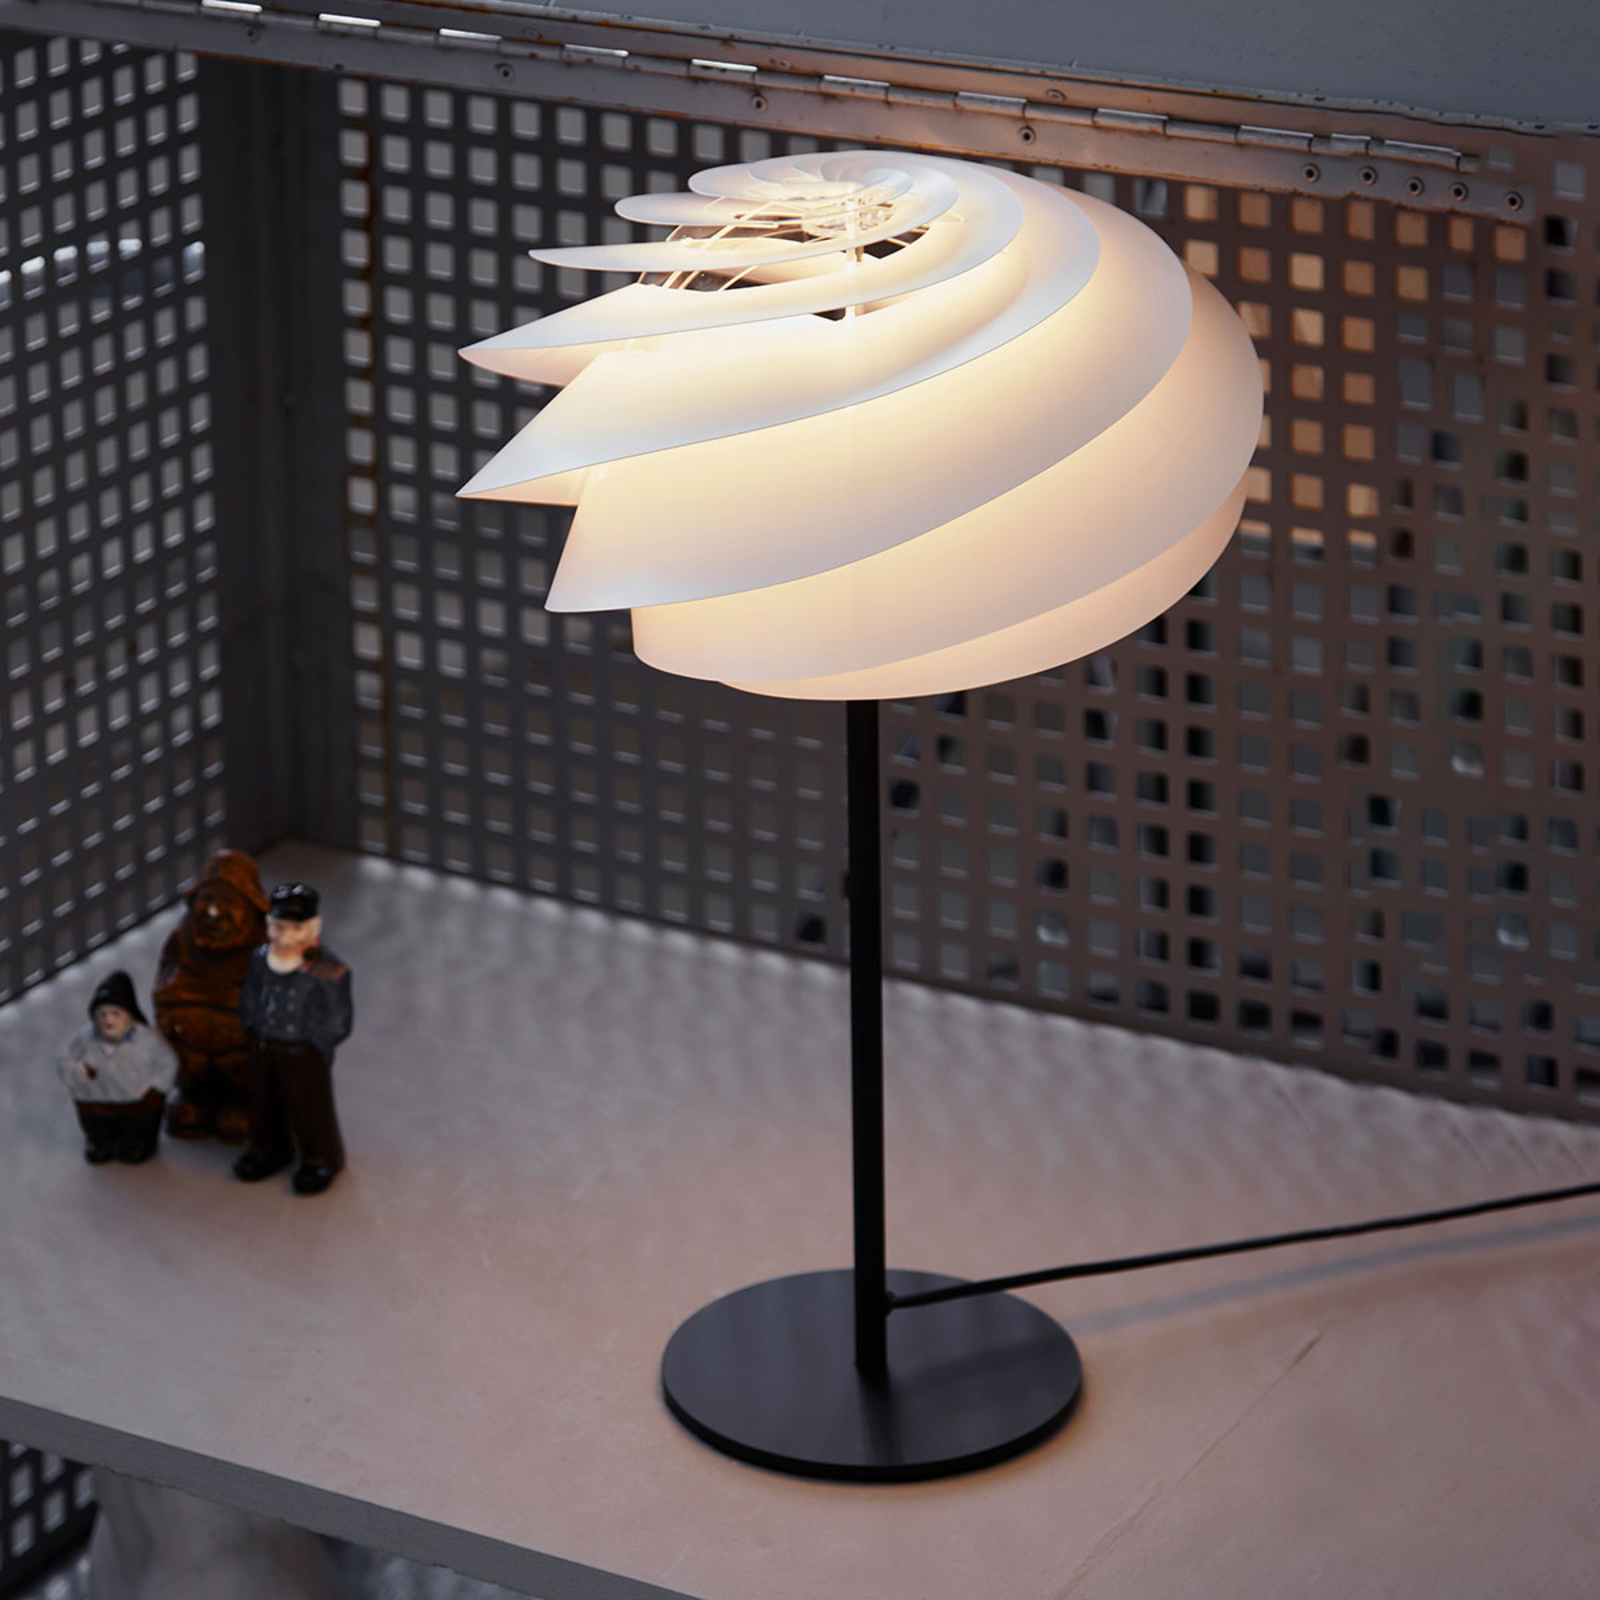 LE KLINT Swirl - fehér designer lámpa